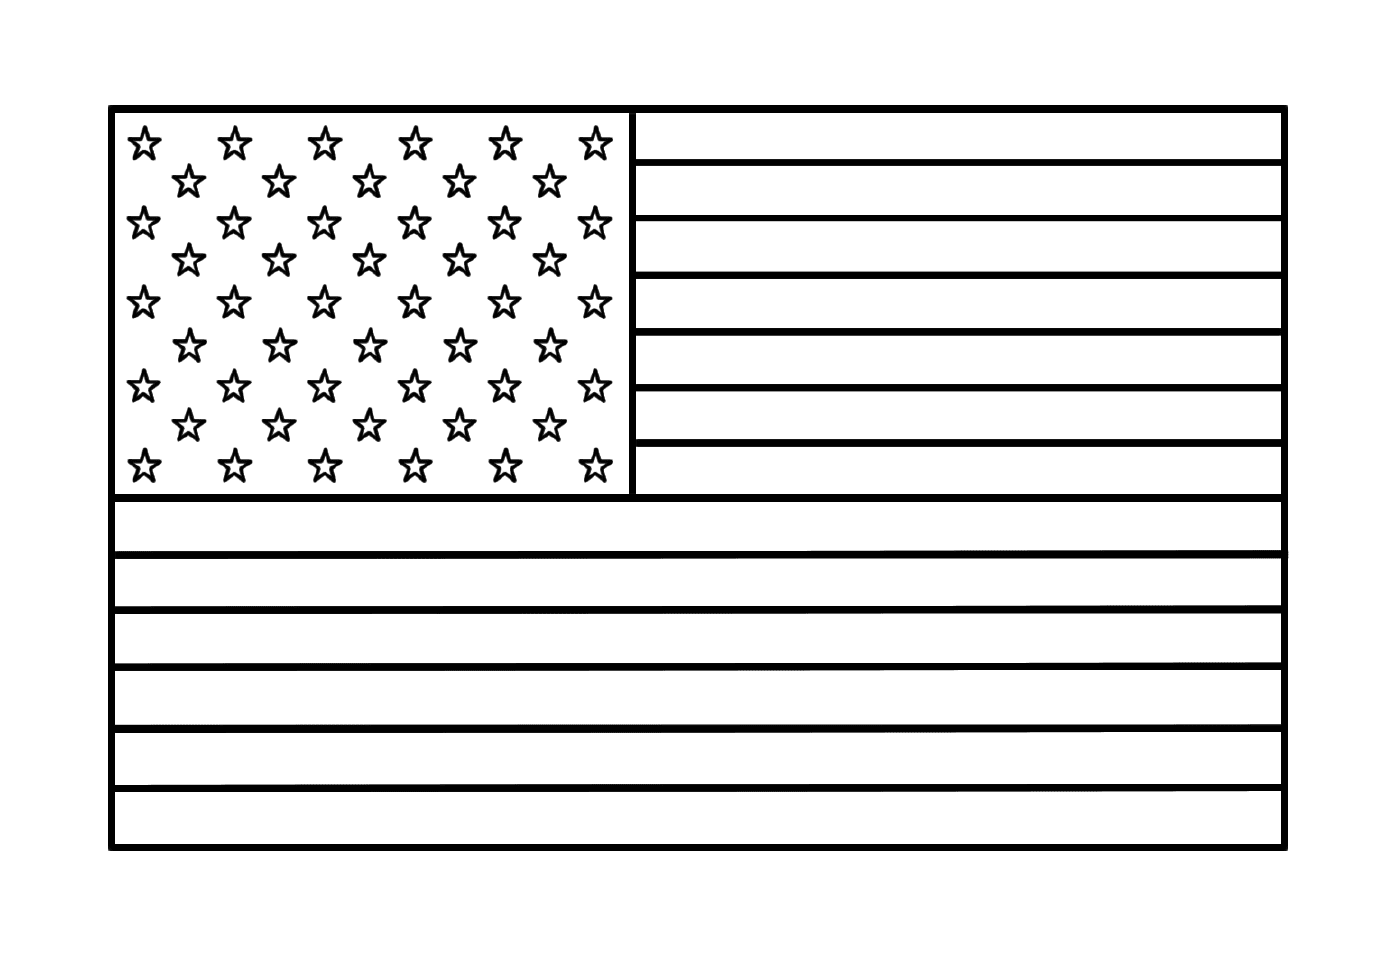  Original American flag with stars 